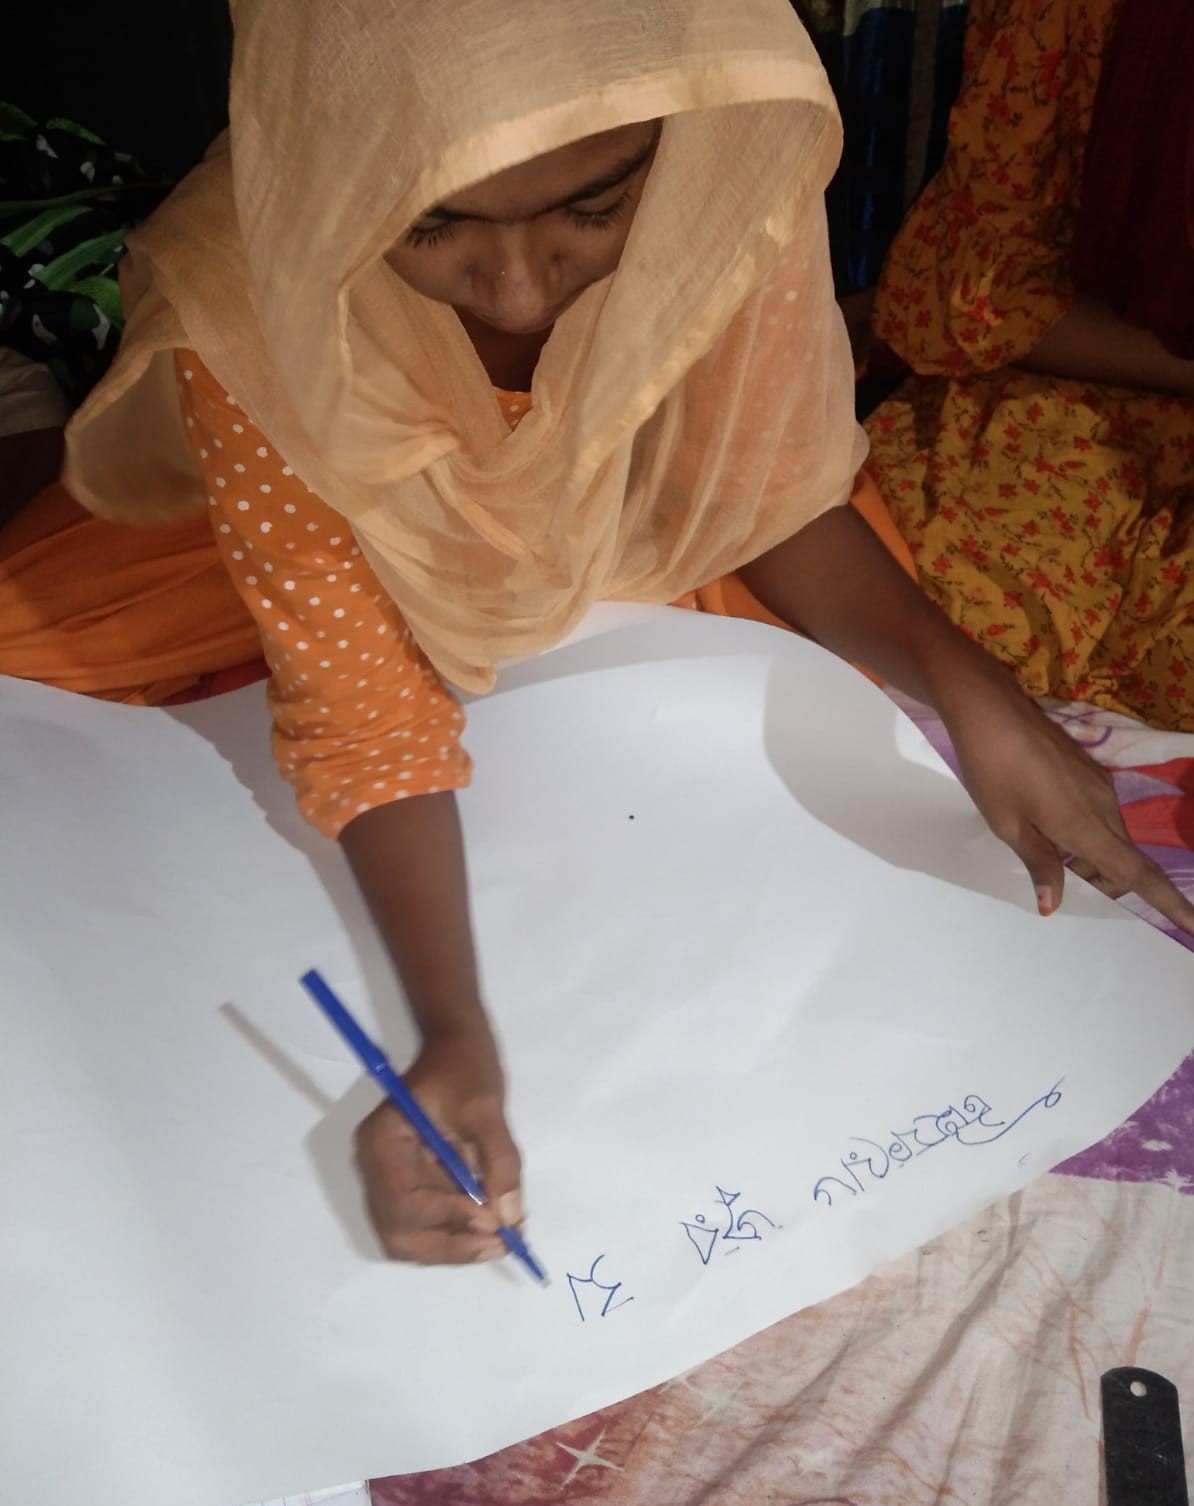 Farzana making a poster on typhoid awareness